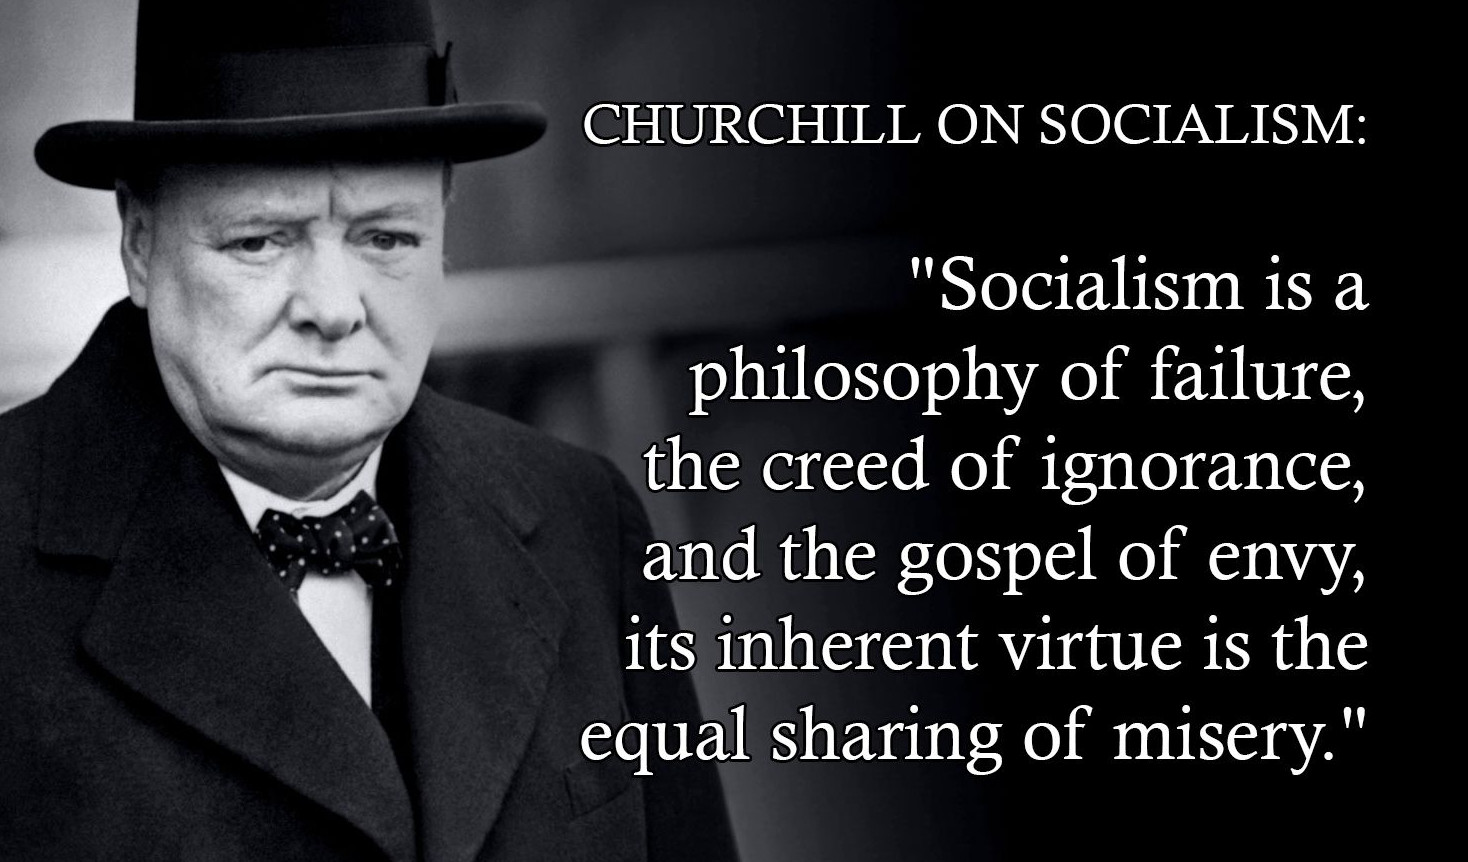 Churchill on socialism